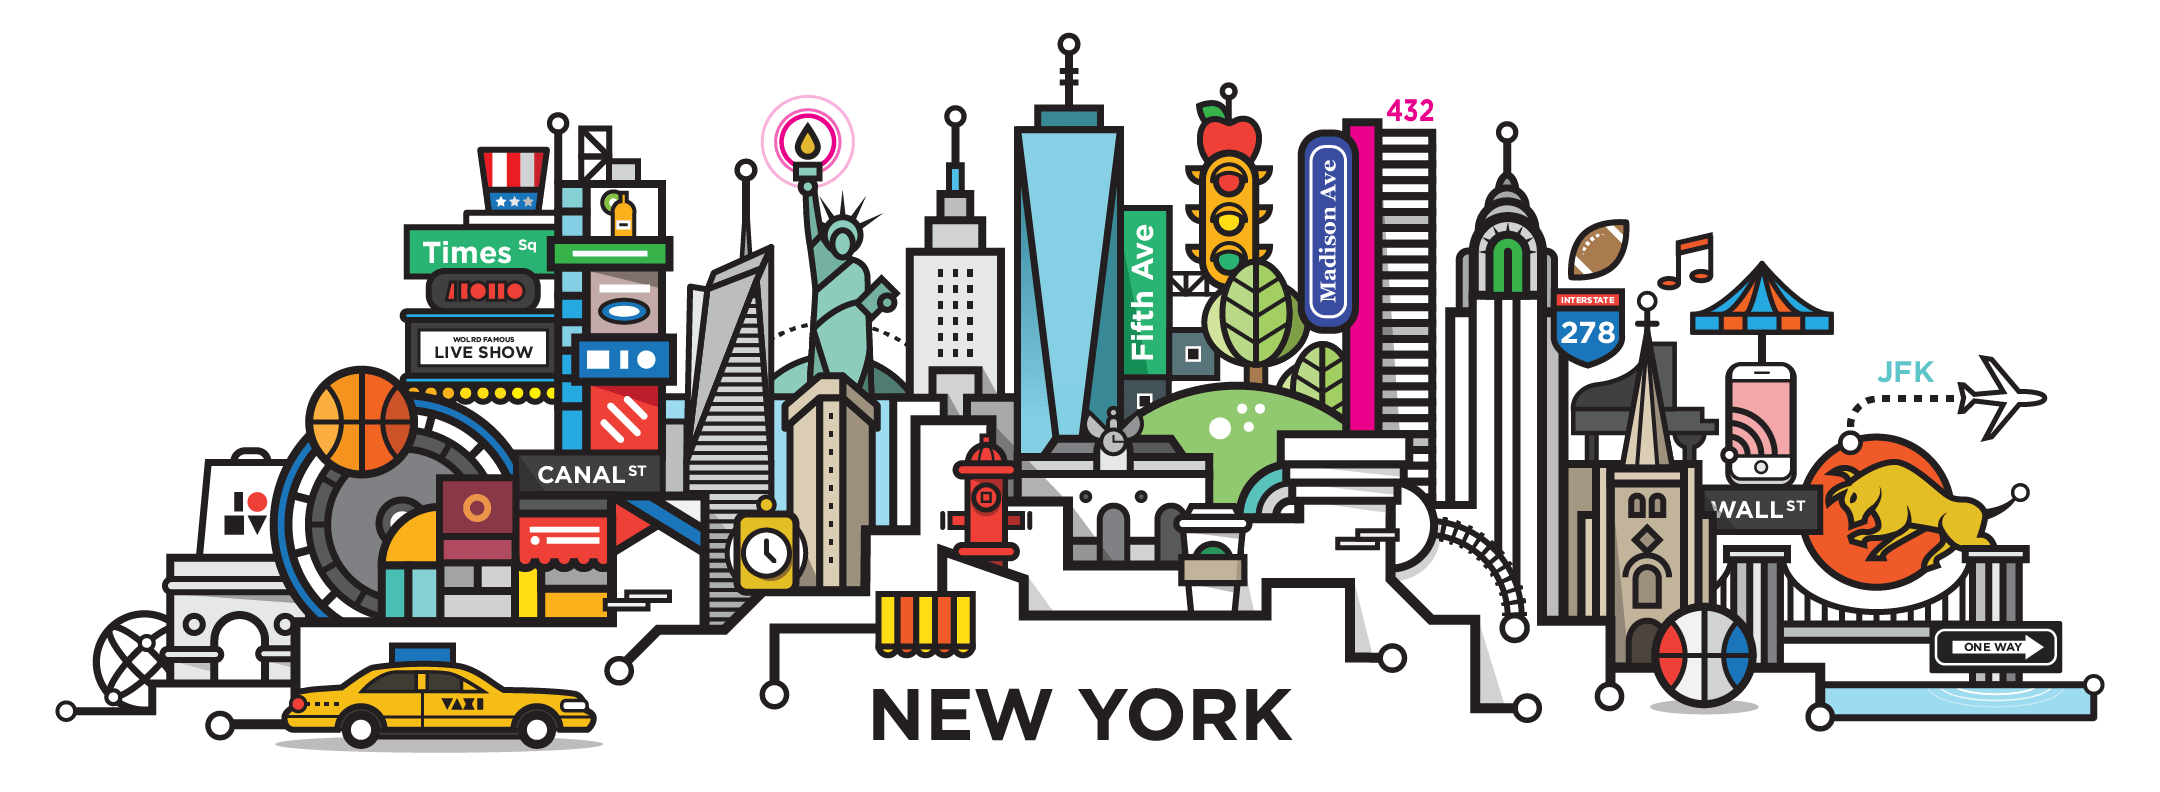 new-york-cityline-illustration-by-loogart